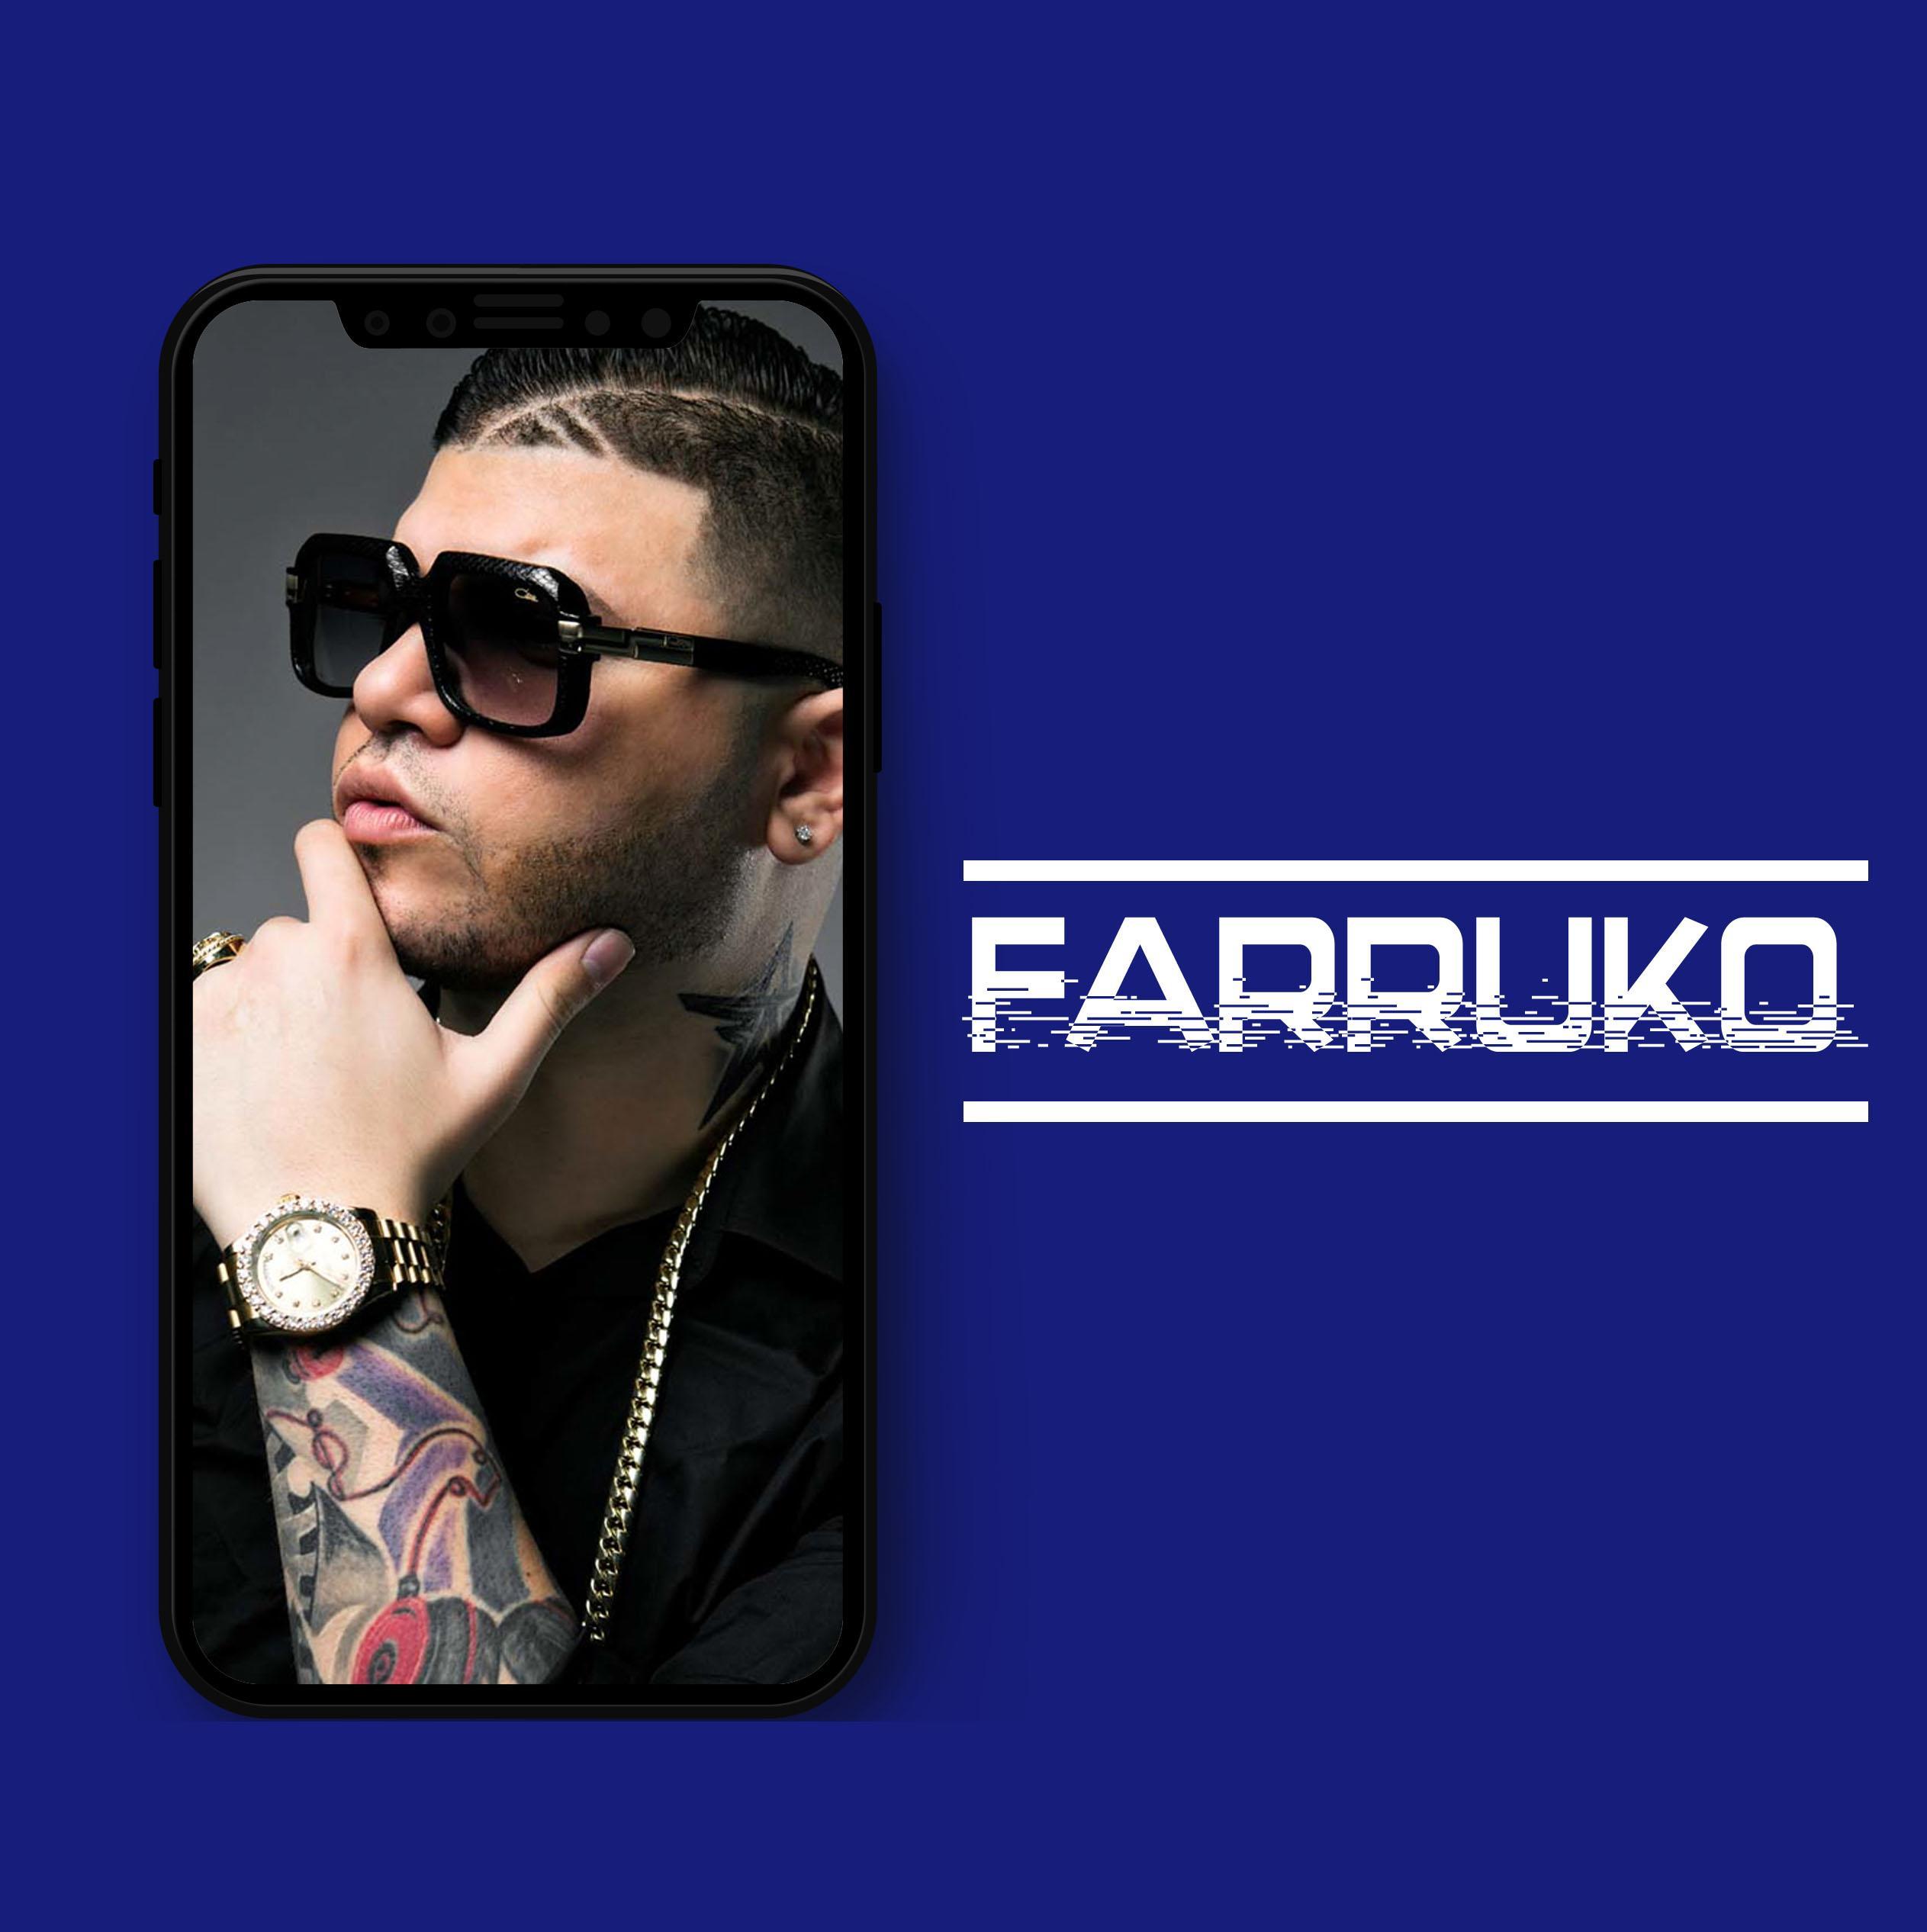 Farruko Wallpaper HD 4k For Android Apk